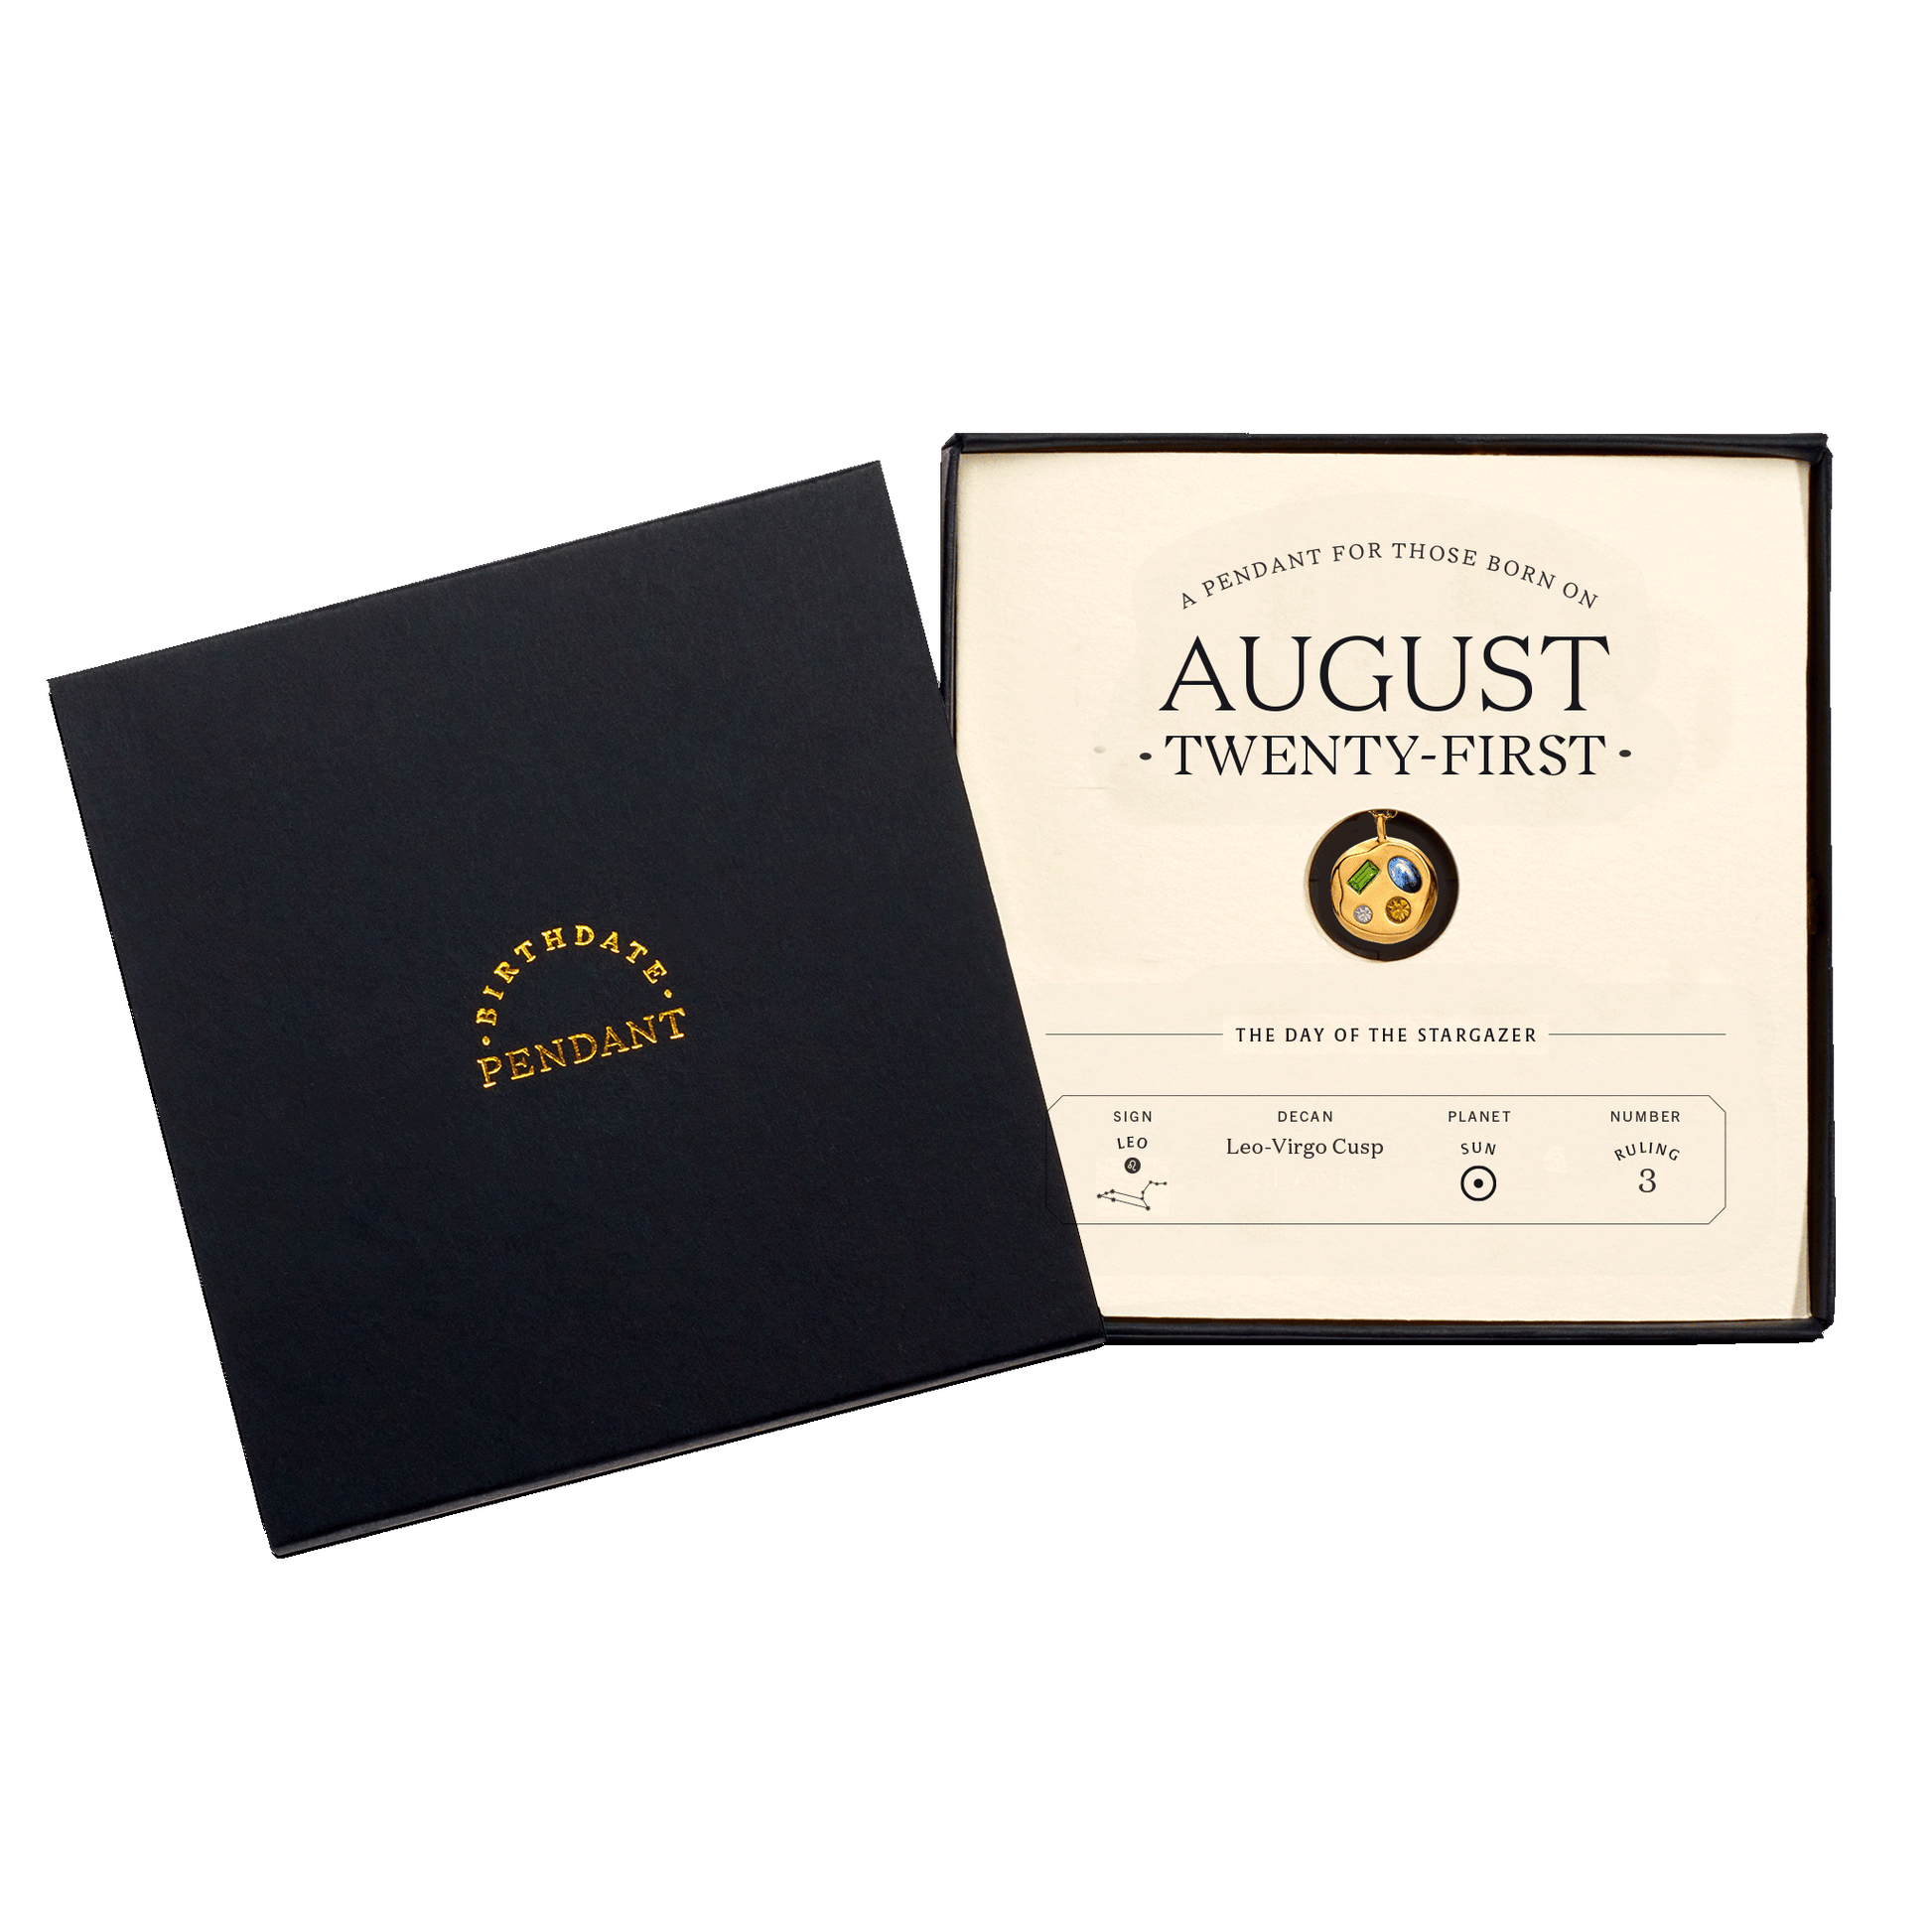 The August Twenty-First Pendant inside its box